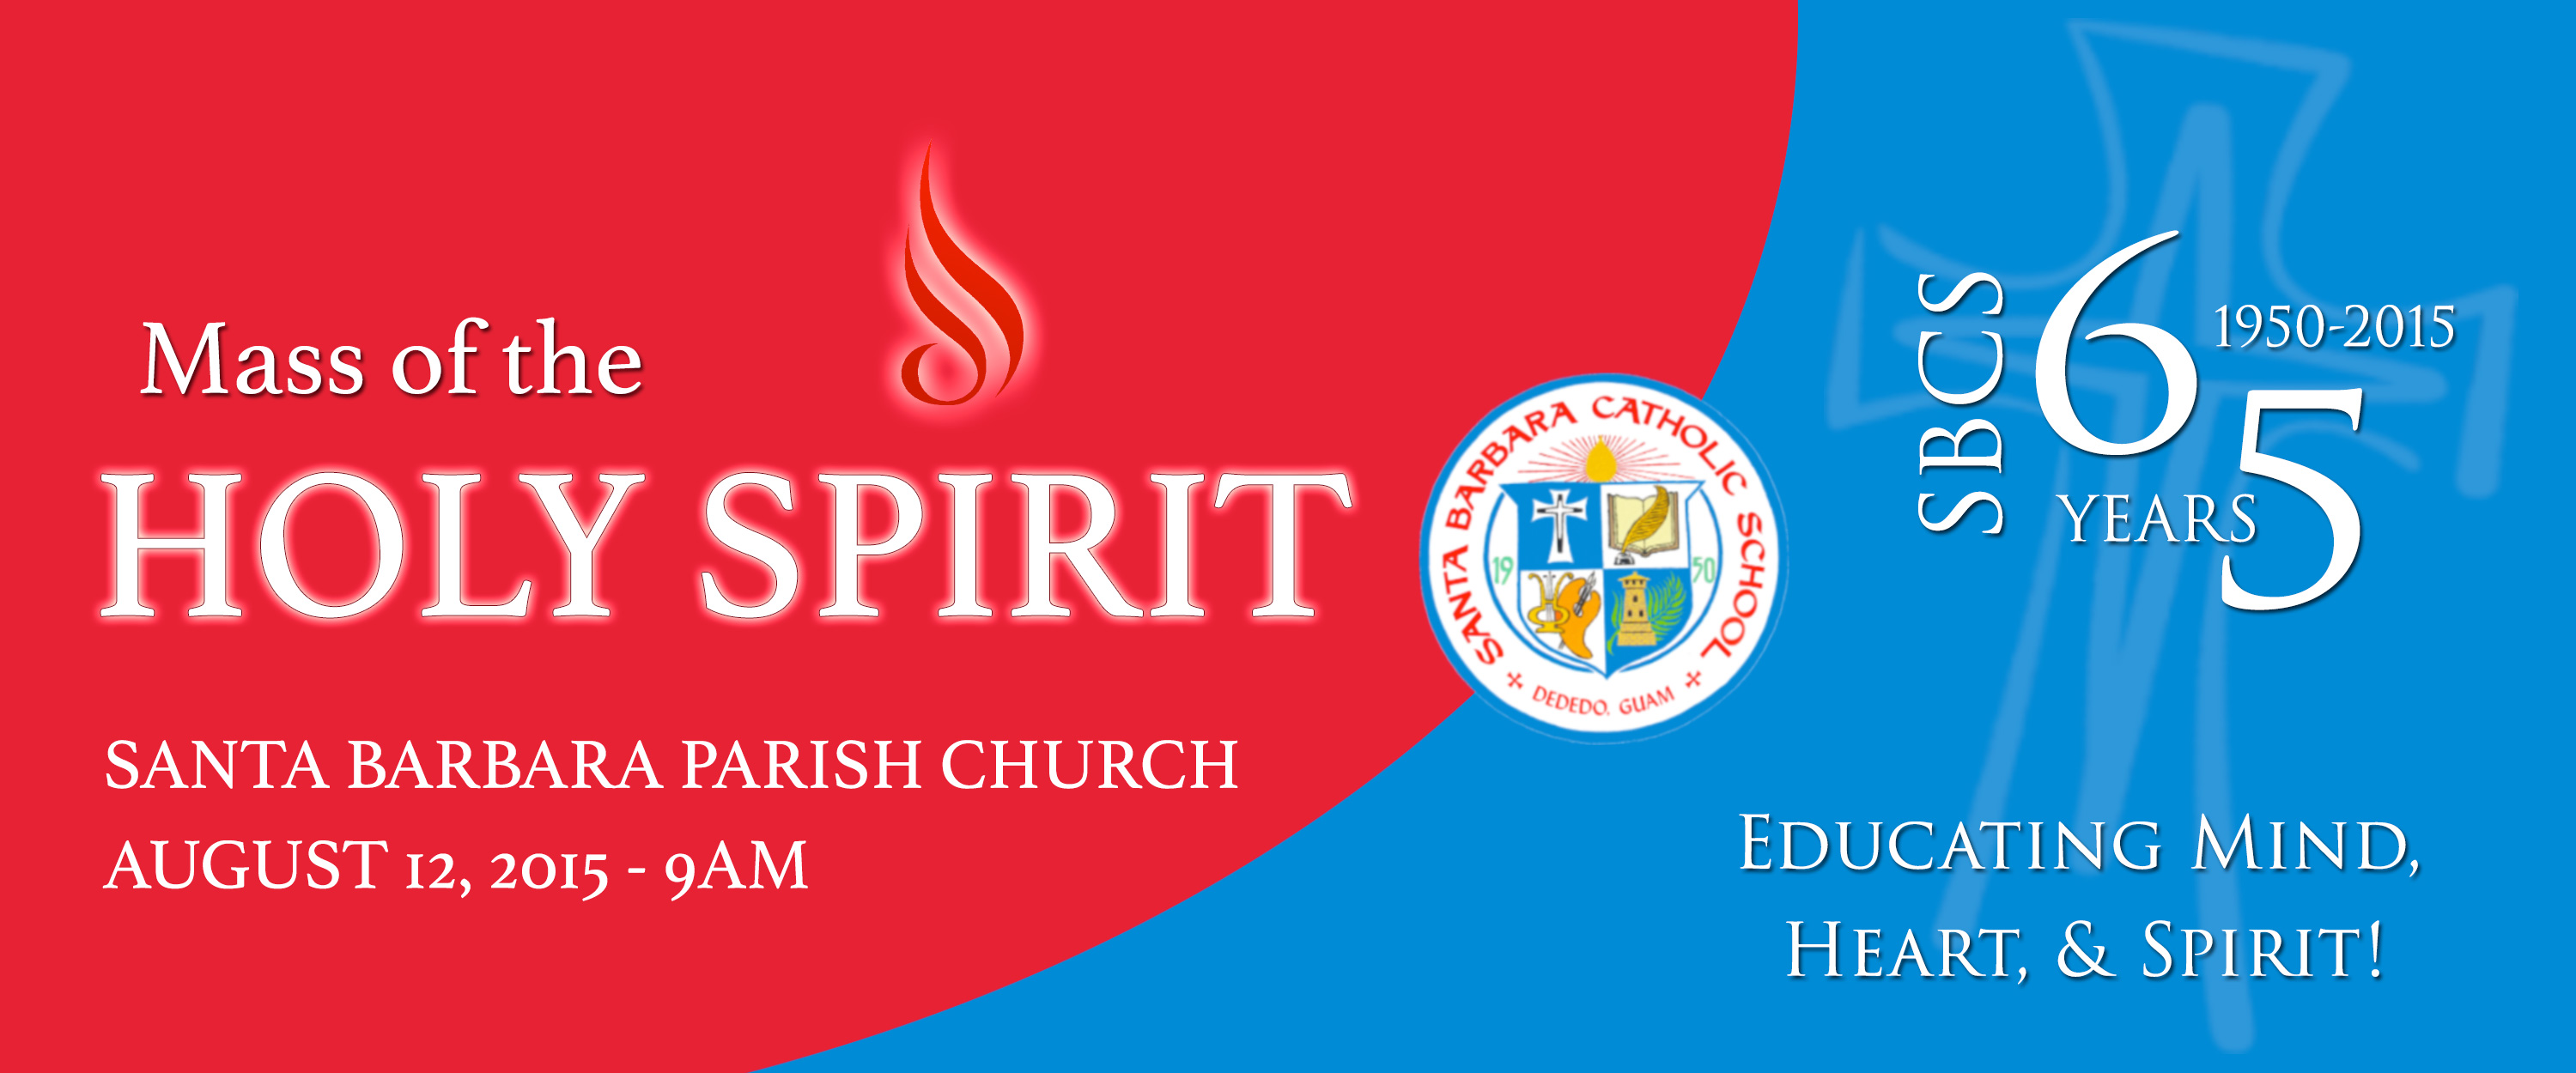 Mass-of-the-Holy-Spirit